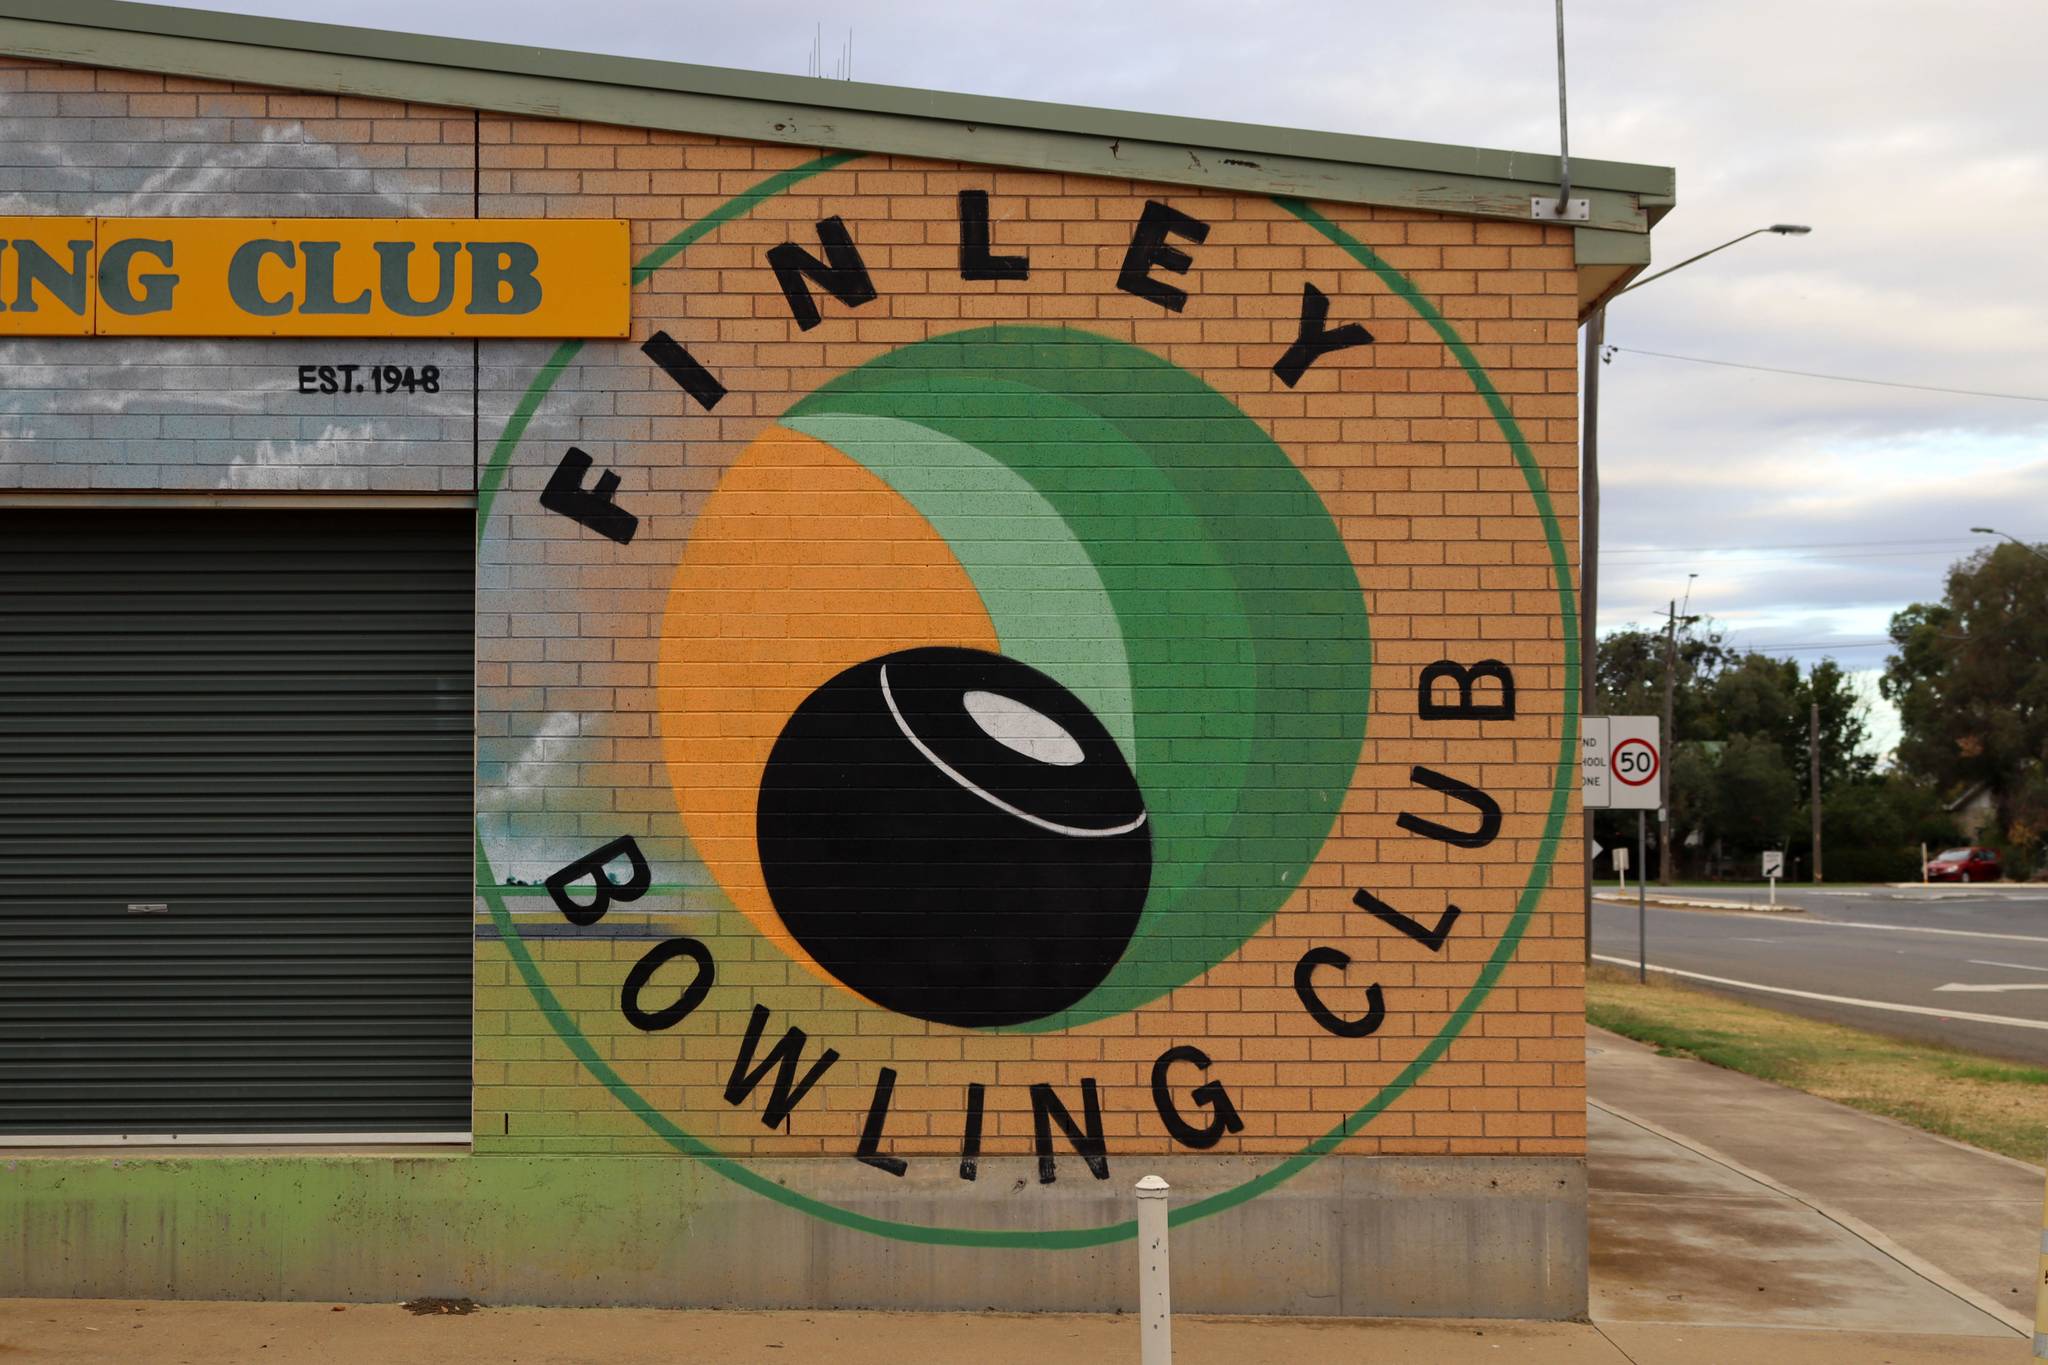 Heesco, Damien Mitchell&mdash;Finley Bowling Club